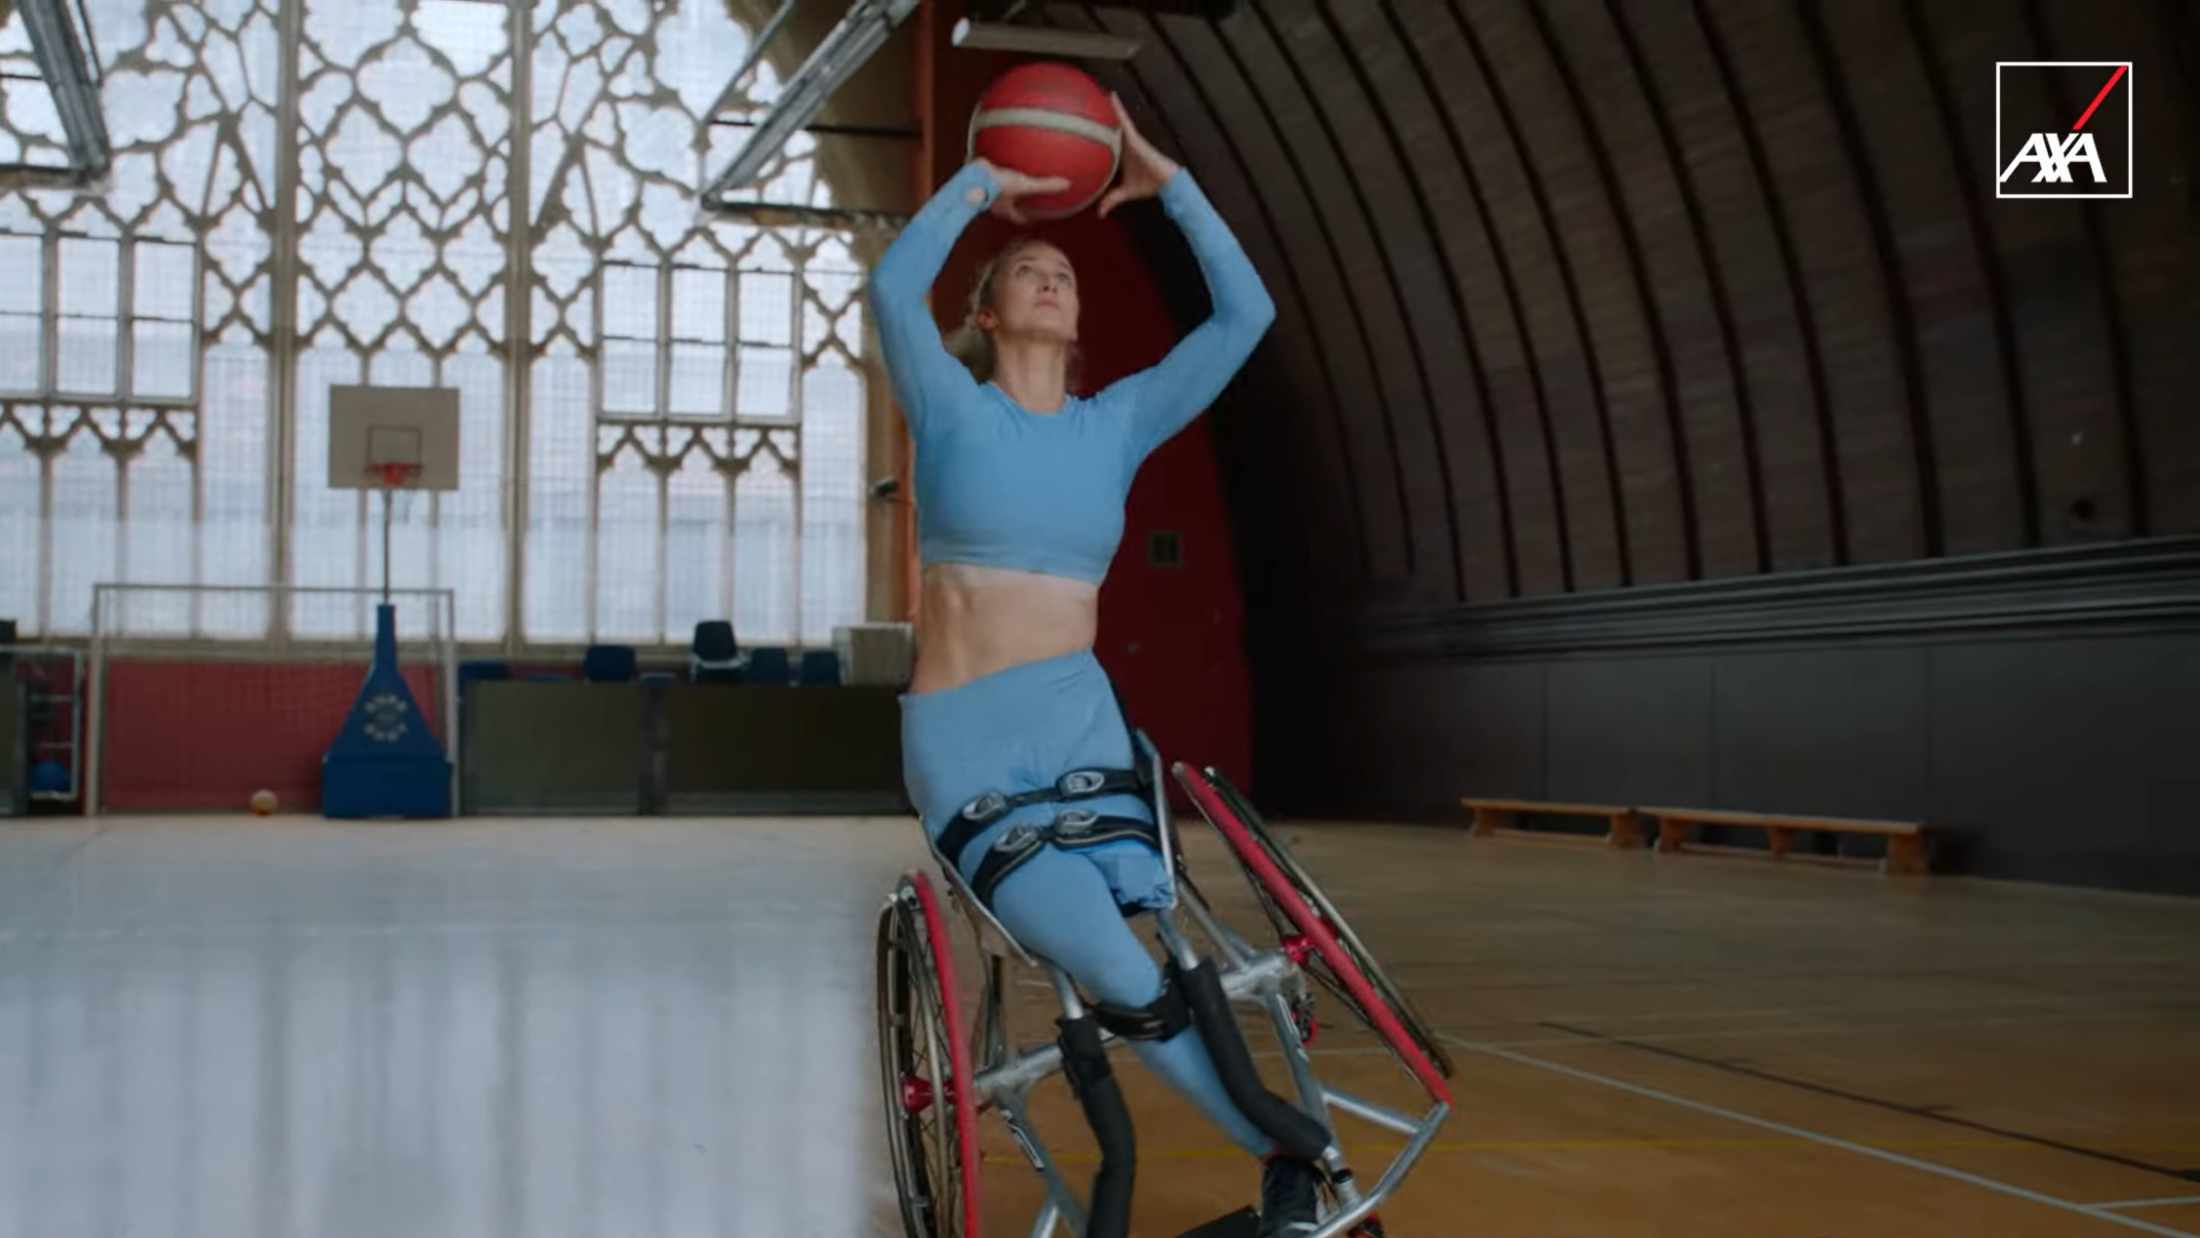 Amy shooting a basketball on her wheelchair